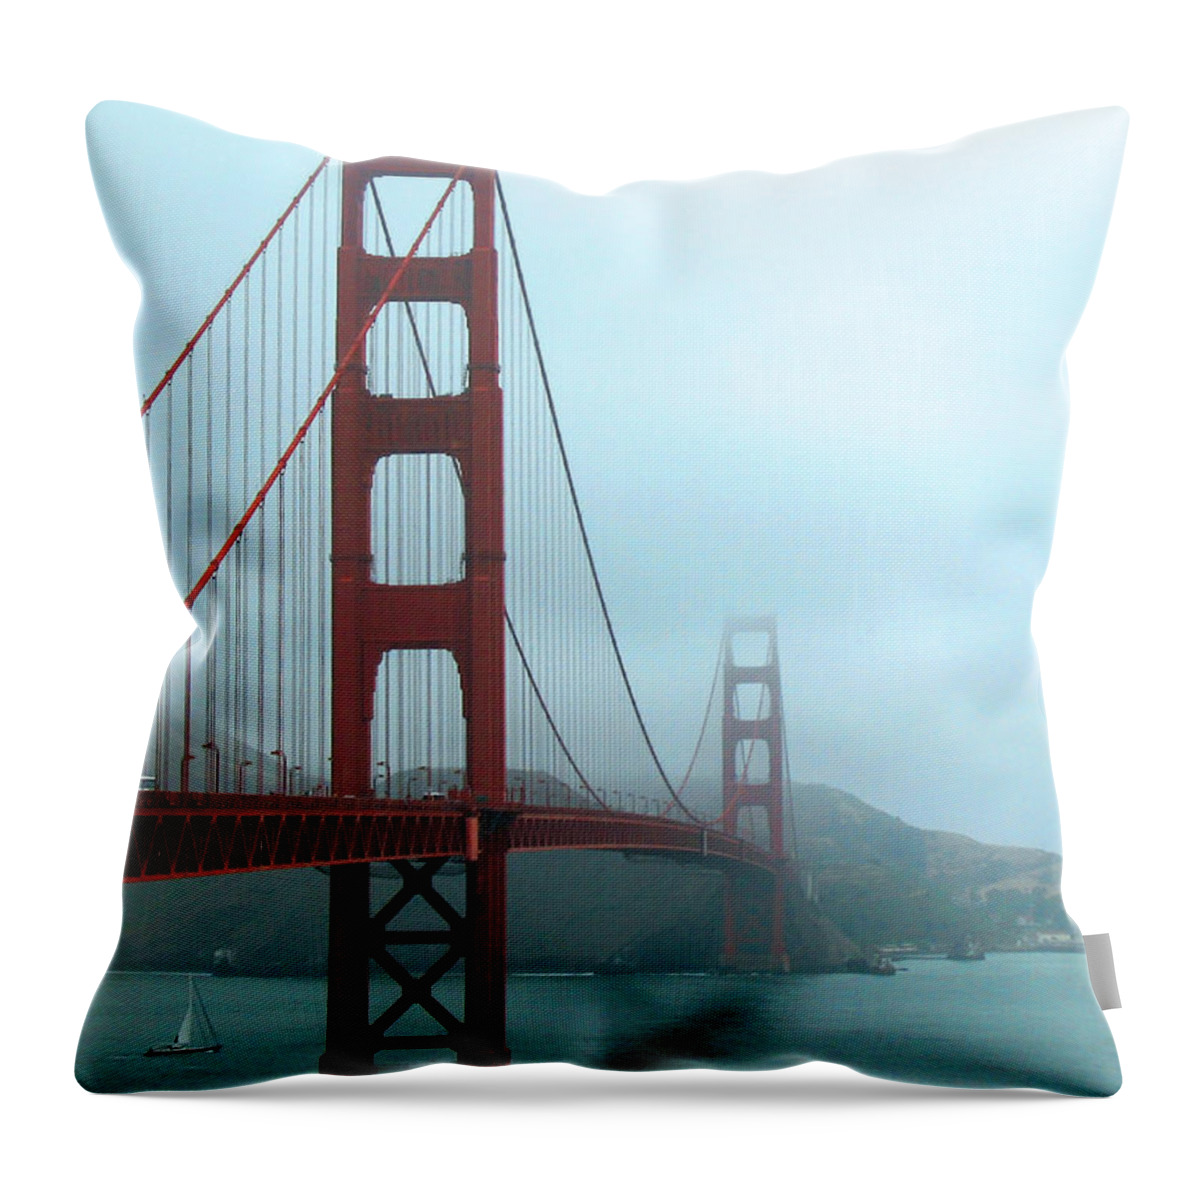 The Golden Gate Bridge Throw Pillow featuring the photograph Sailing Under the Golden Gate Bridge by Connie Fox